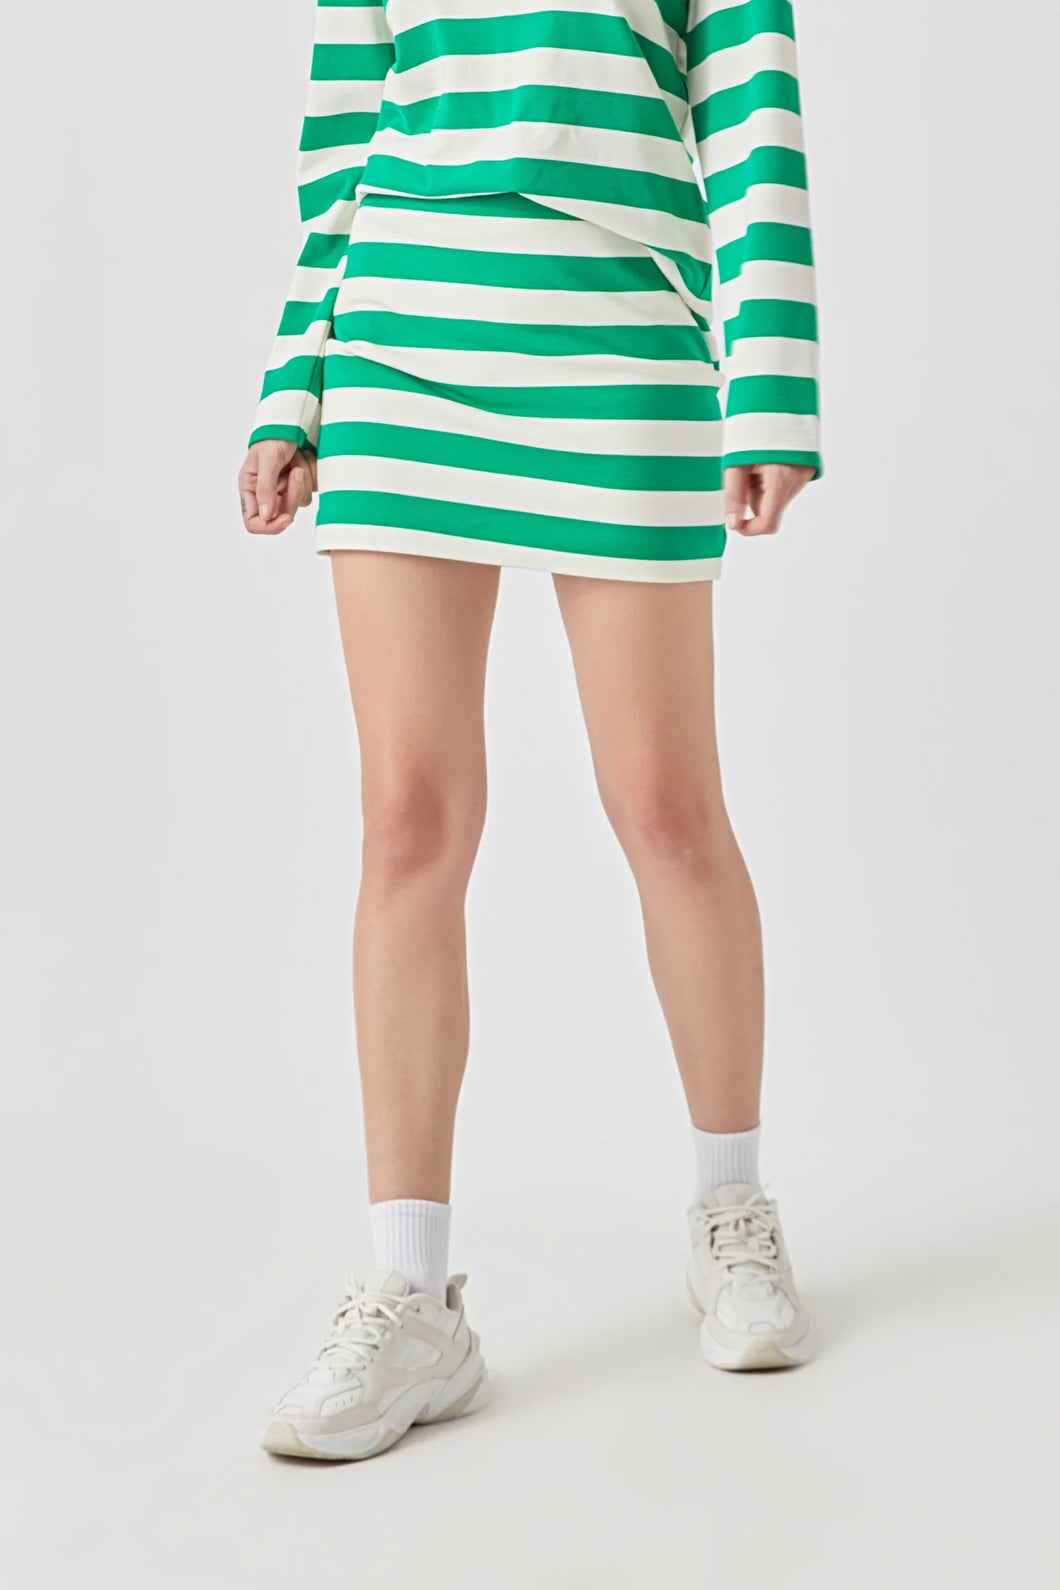 Green and White Stripe Skirt